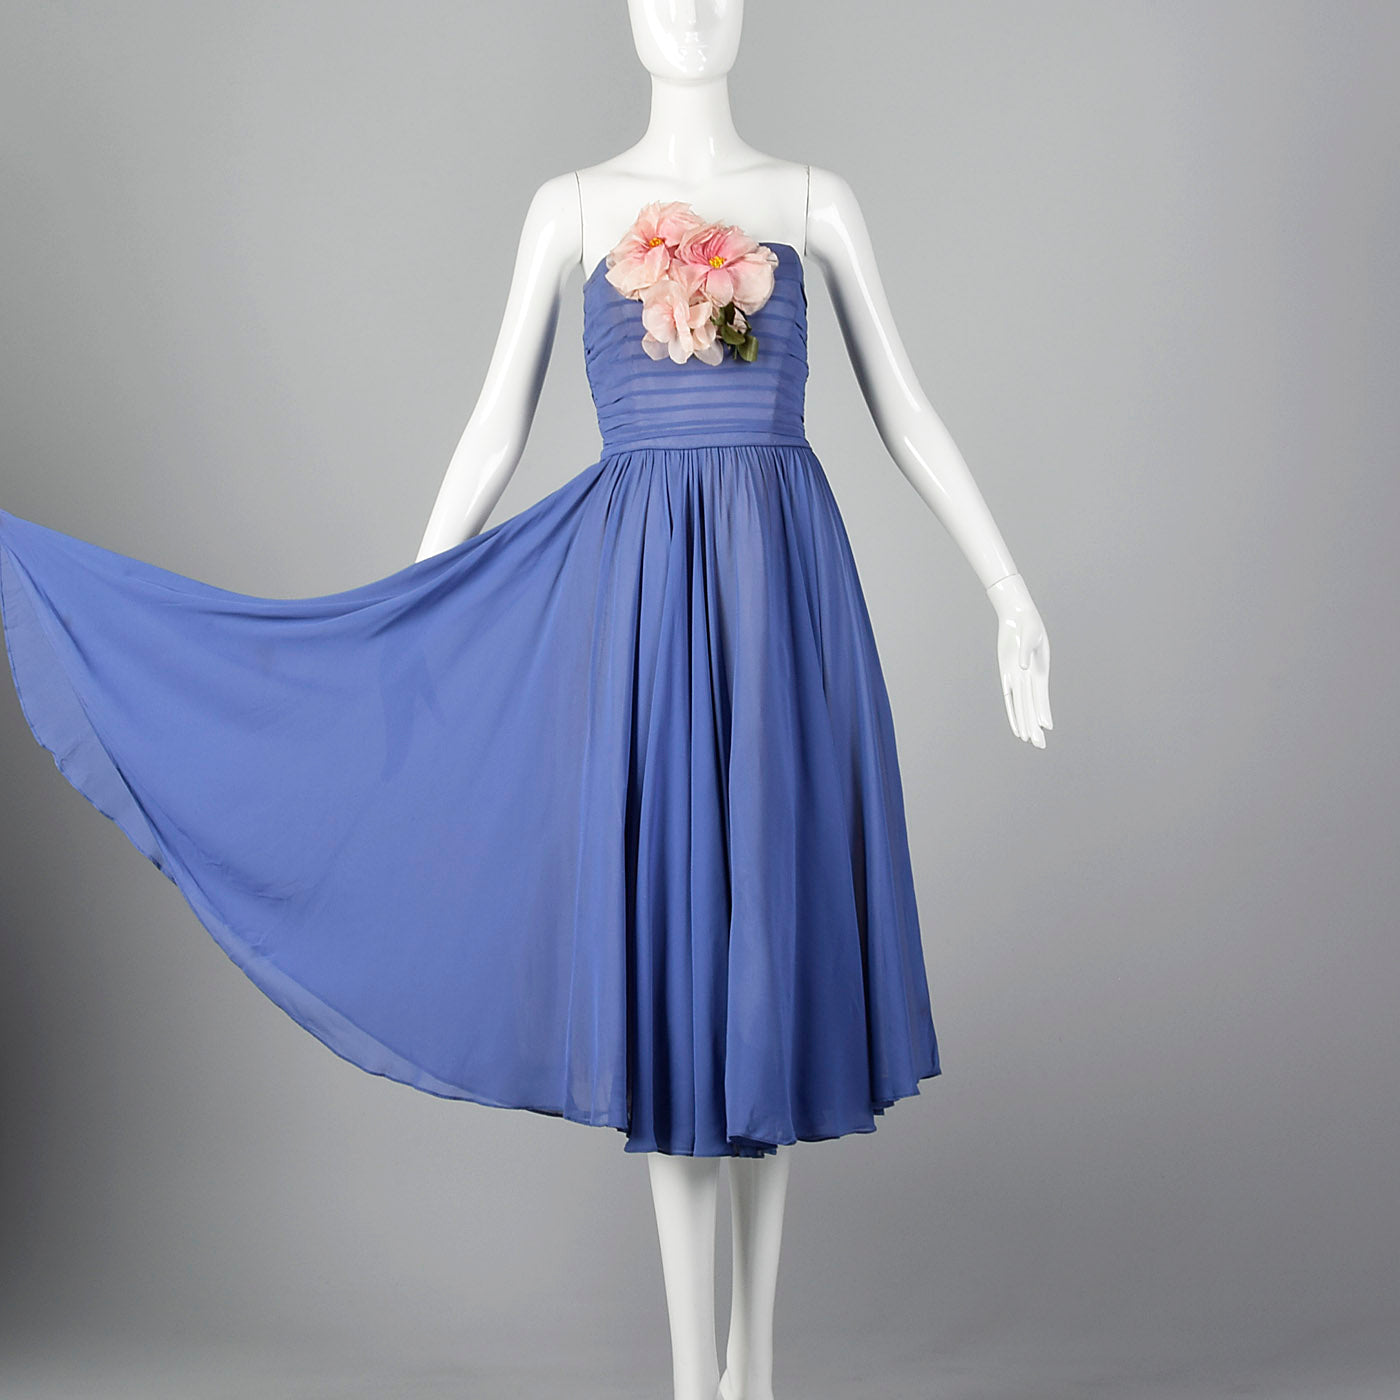 1950s Periwinkle Blue Chiffon Party Dress